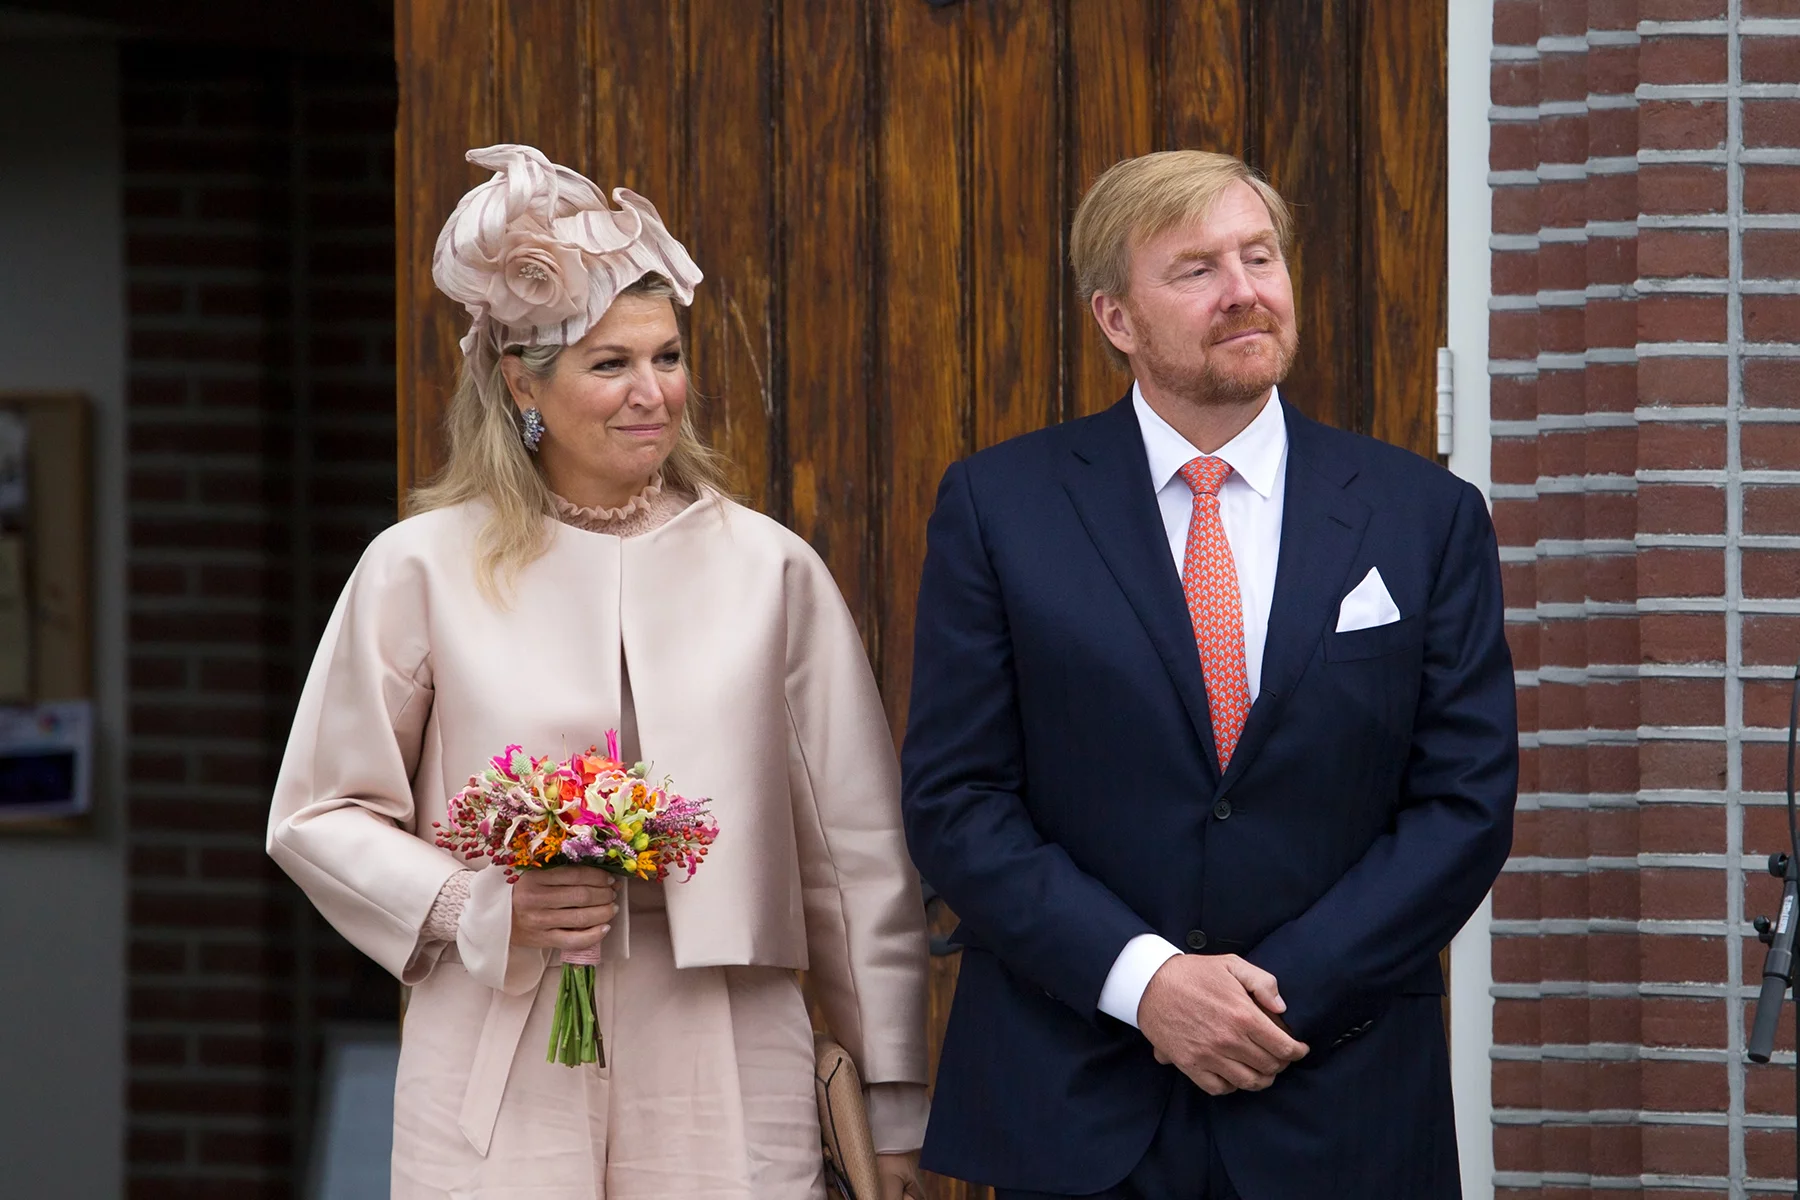 Dutch King Willem-Alexander and Queen Máxima